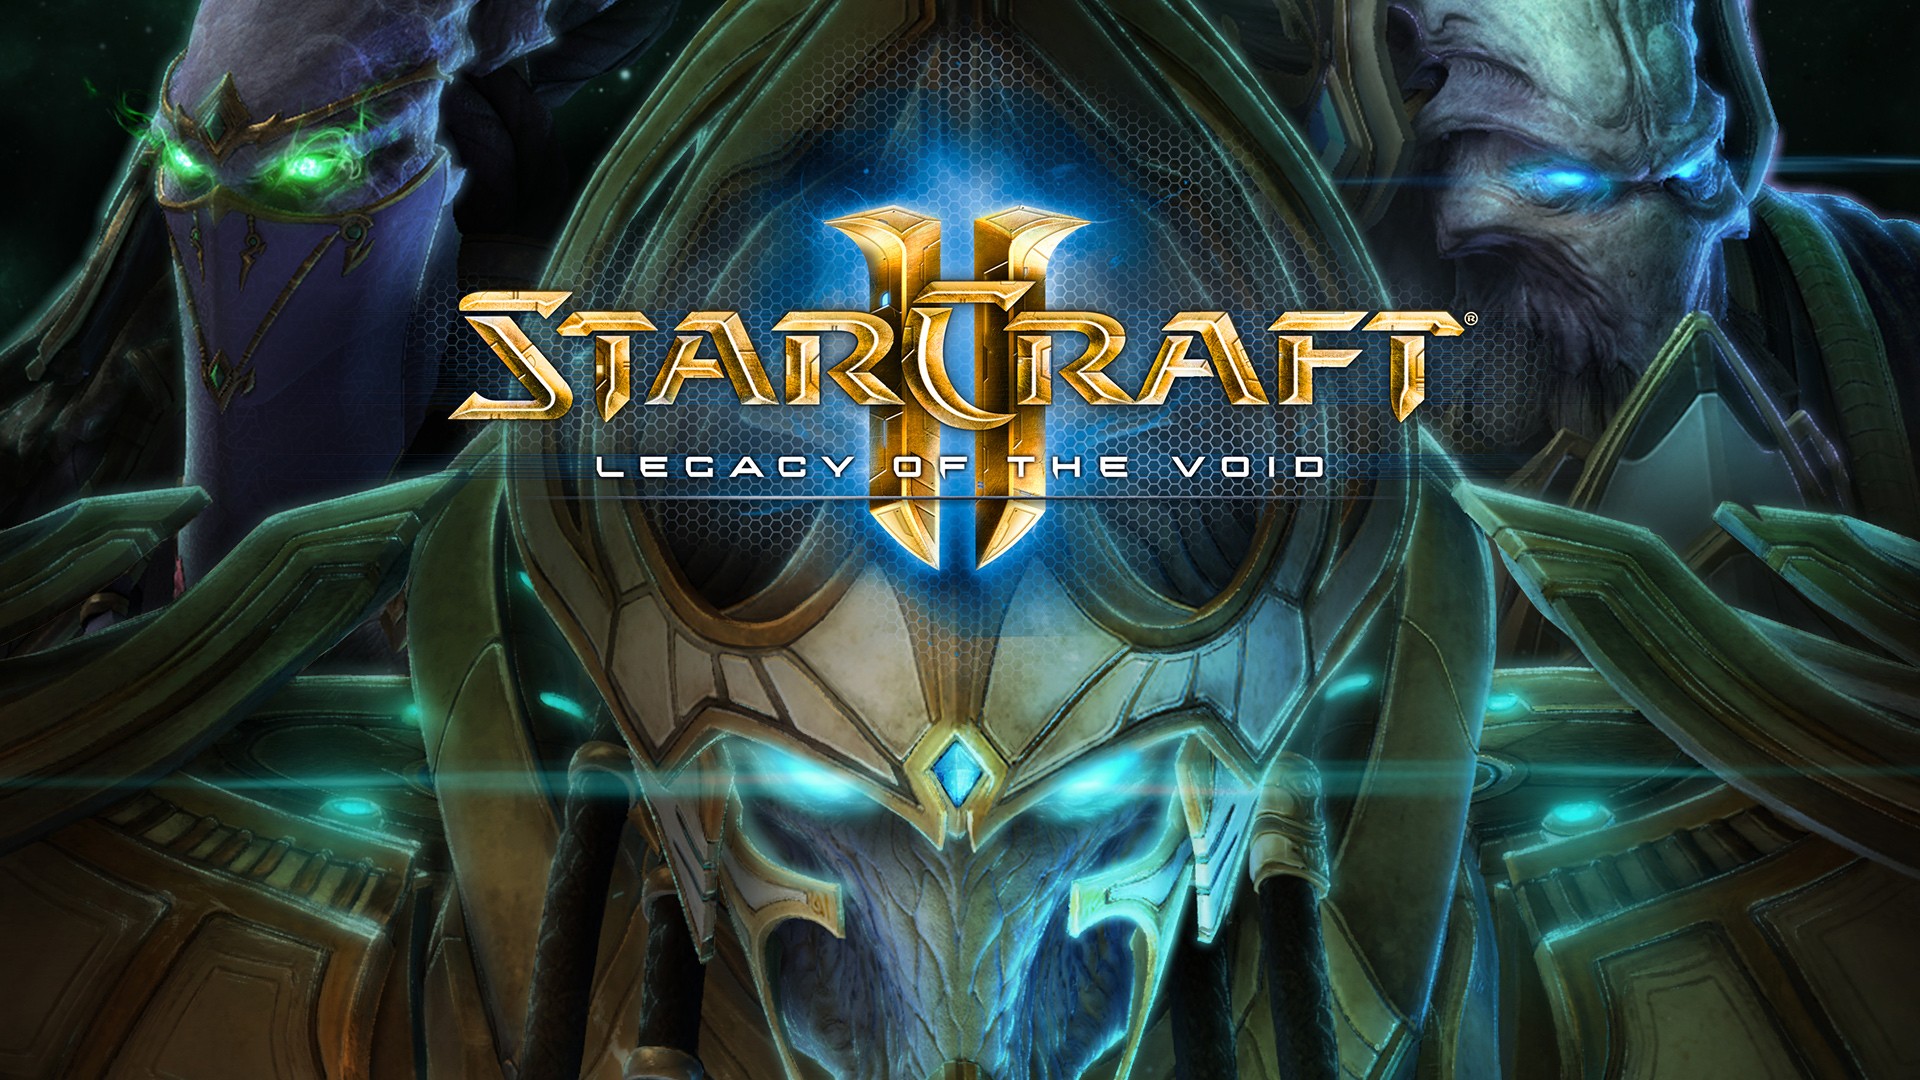 Stacraft 2 Legacy of the Void wallpaper egla